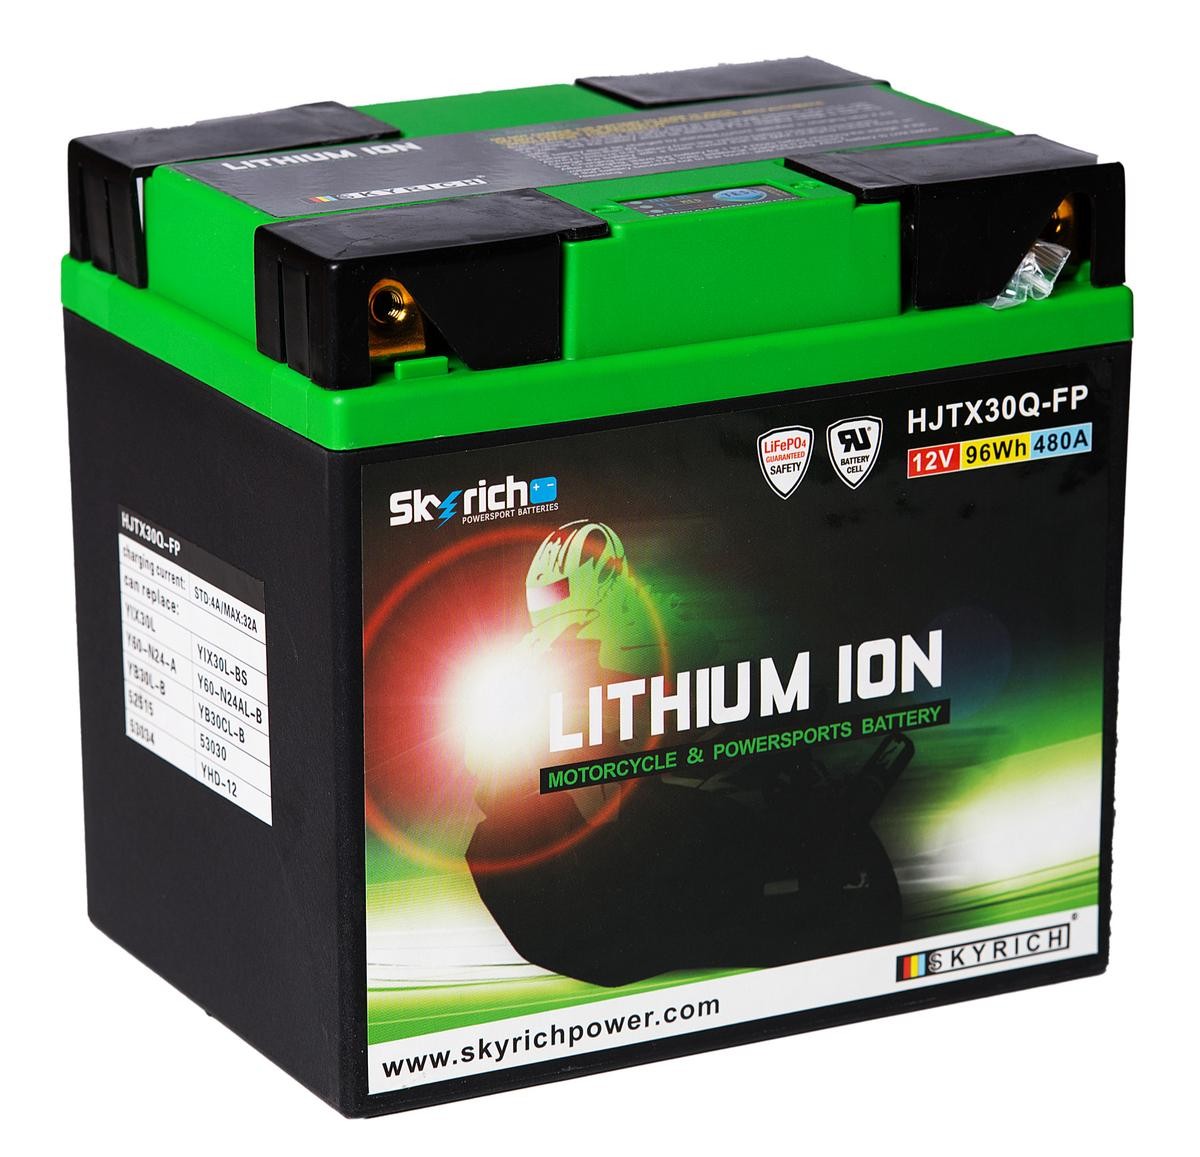 SKYRICH LITHIUM ION Batterie 12V 8Ah 480A N Li-Ionen-Batterie HJTX30Q-FP DUCATI Mofa Maxi-Scooter